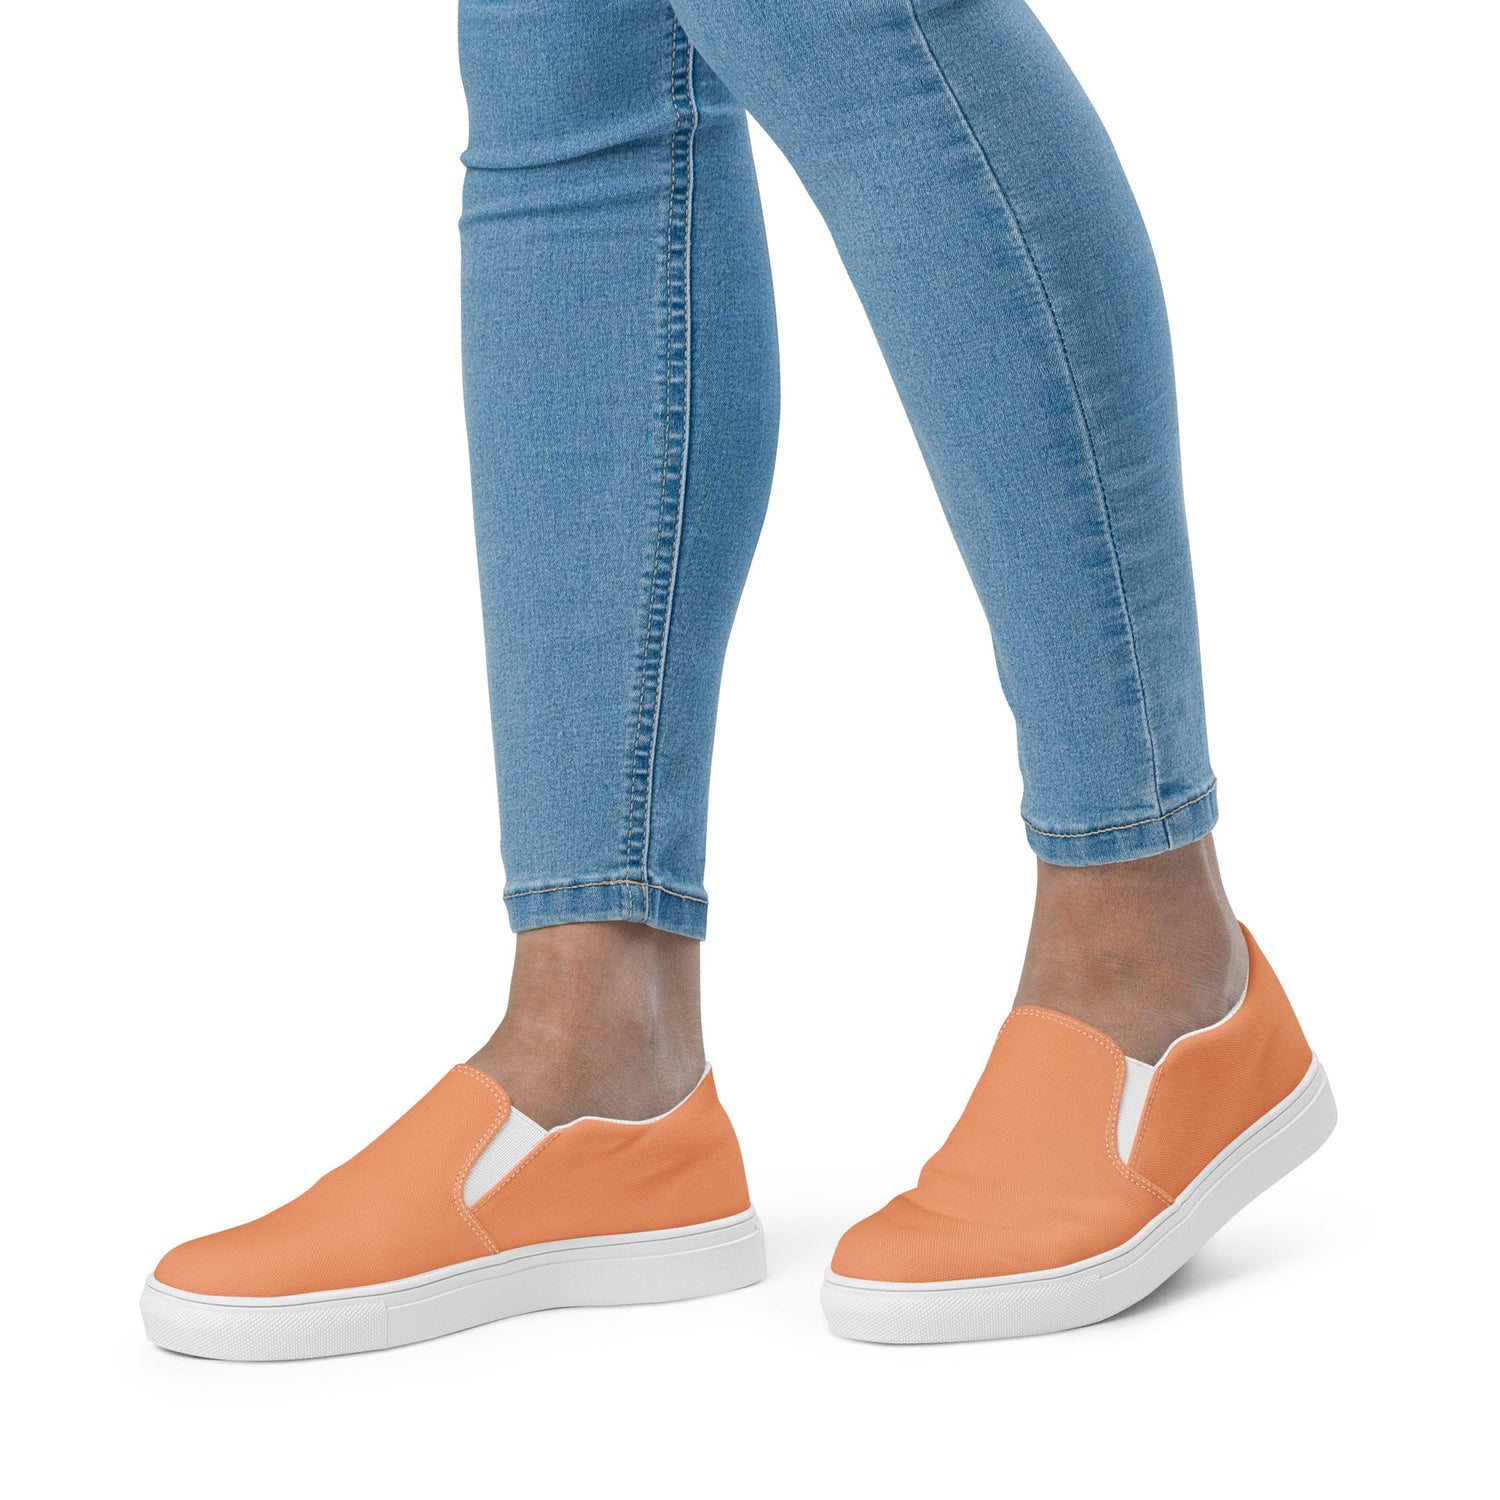 klasneakers Women’s slip-on canvas shoes - Peach